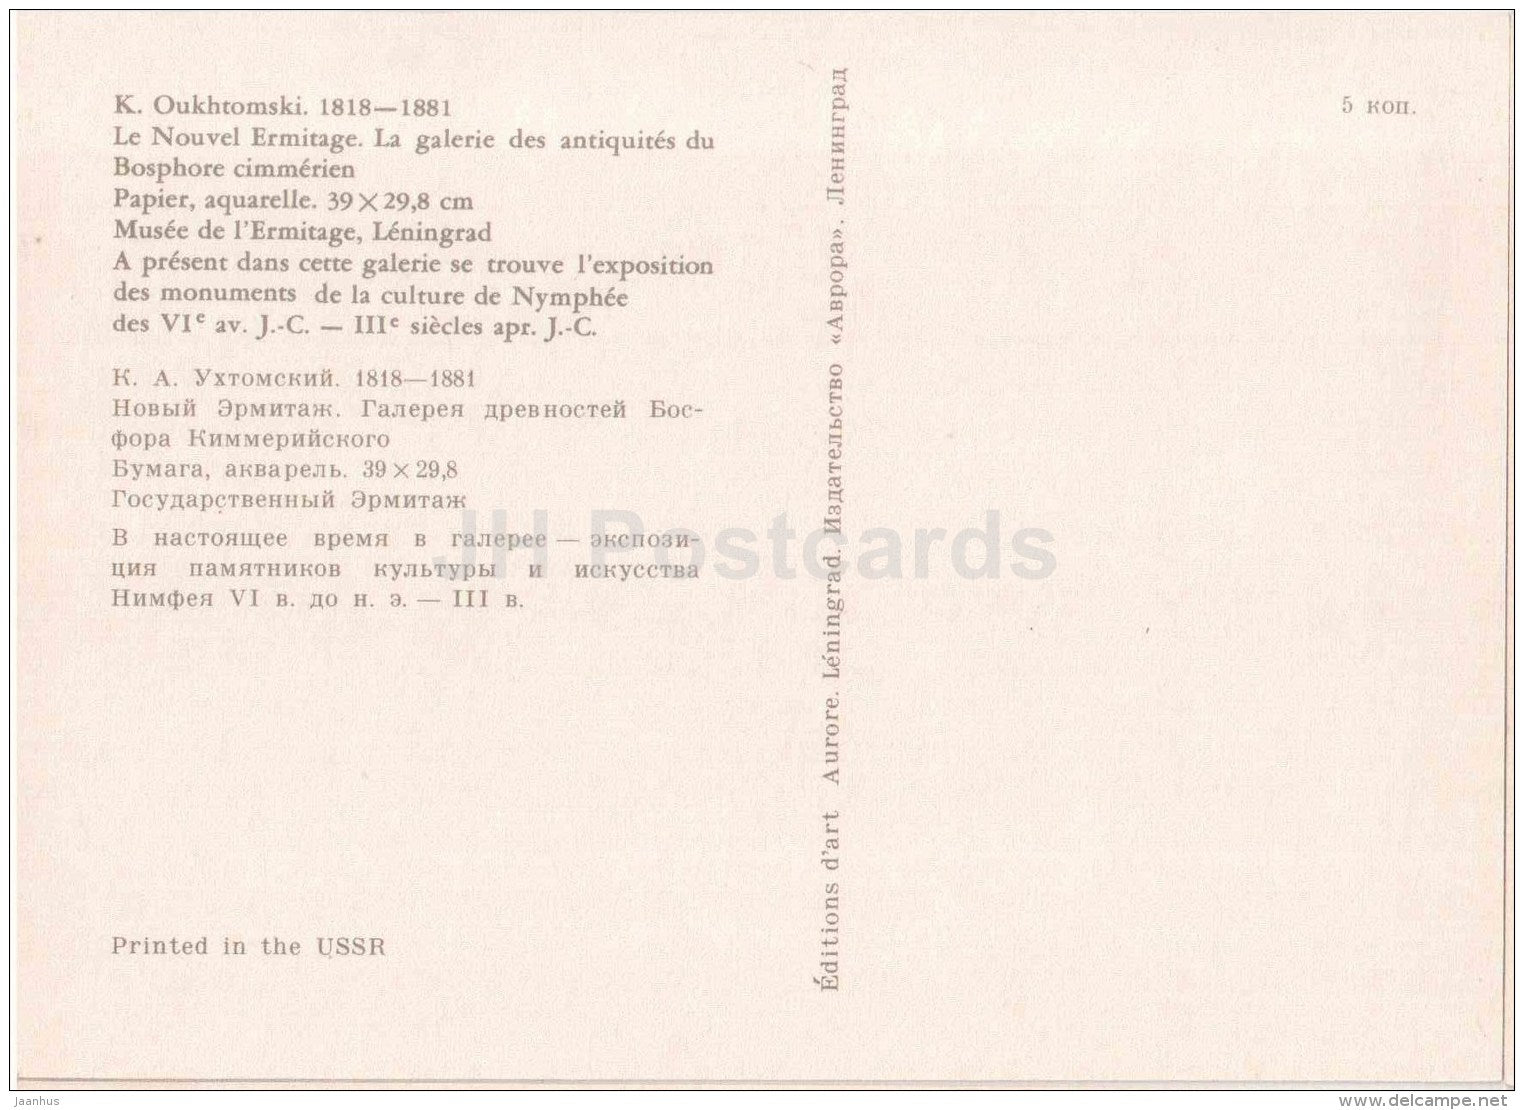 Gallery Cimmerian Bosporus  Antiquities - The New Hermitage - St. Petersburg - Leningrad - 1975 - Russia USSR - unused - JH Postcards